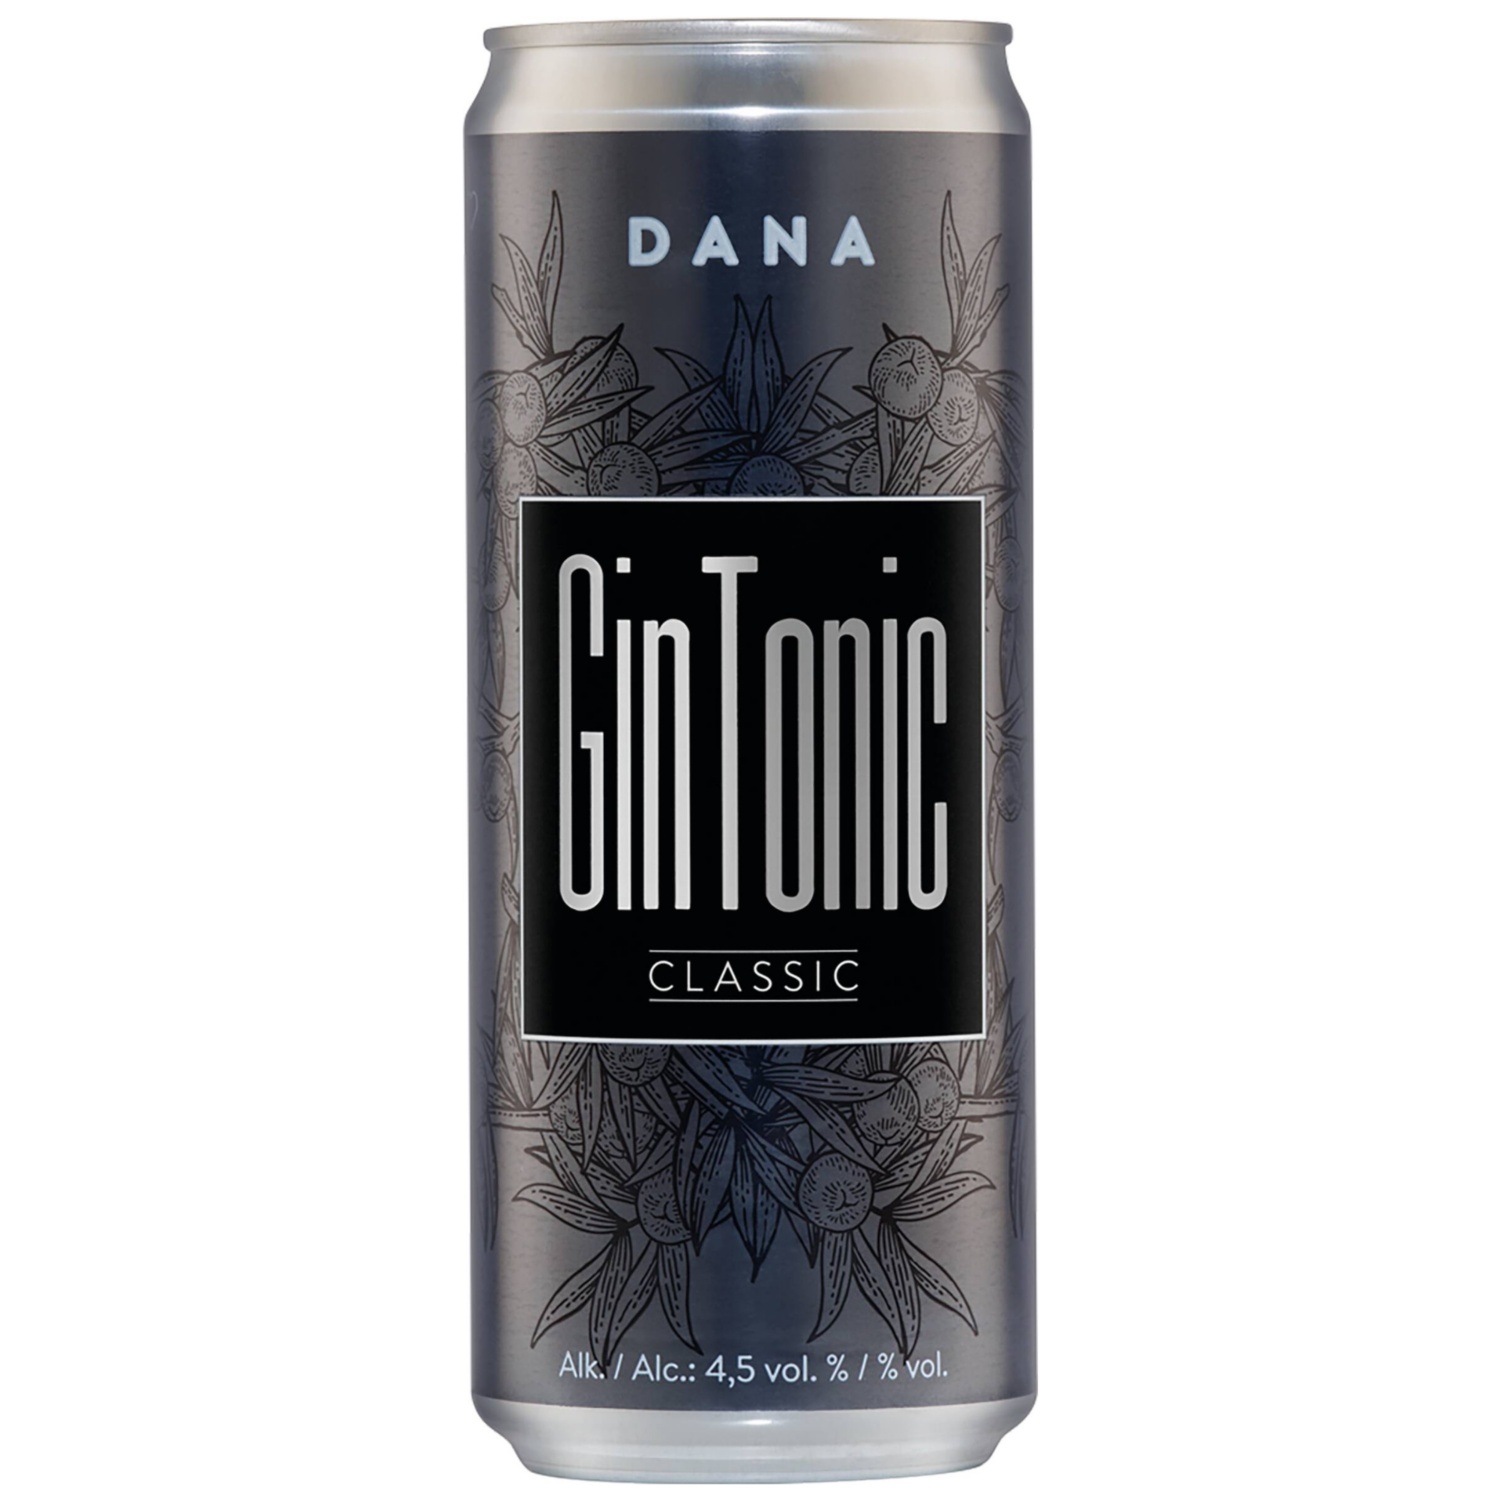 DANA Gin Tonic, Classic